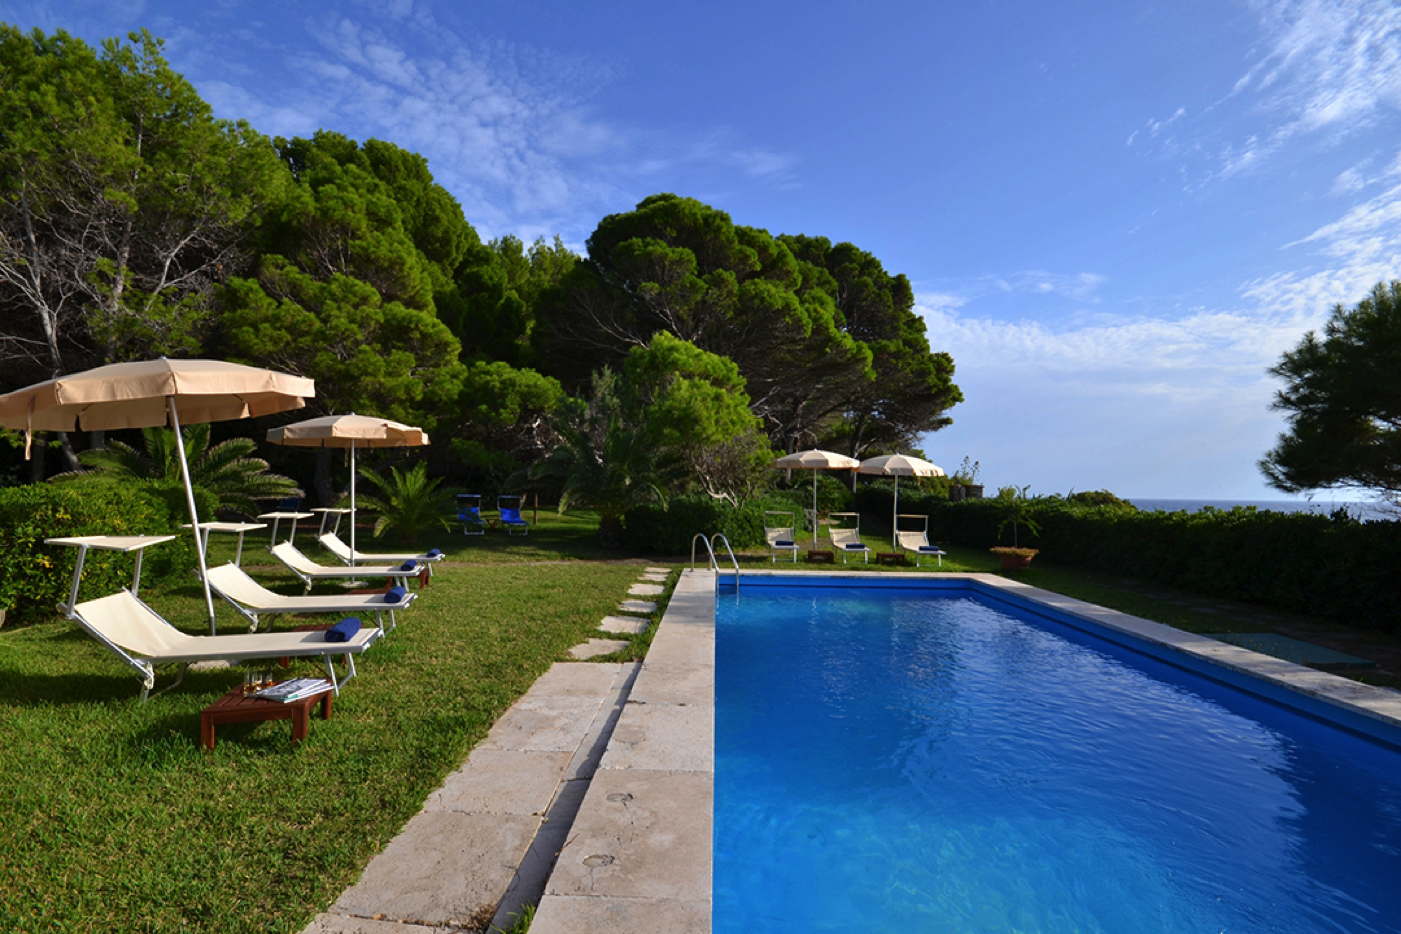 Beachfront rental villa in Campania with pool an sea access